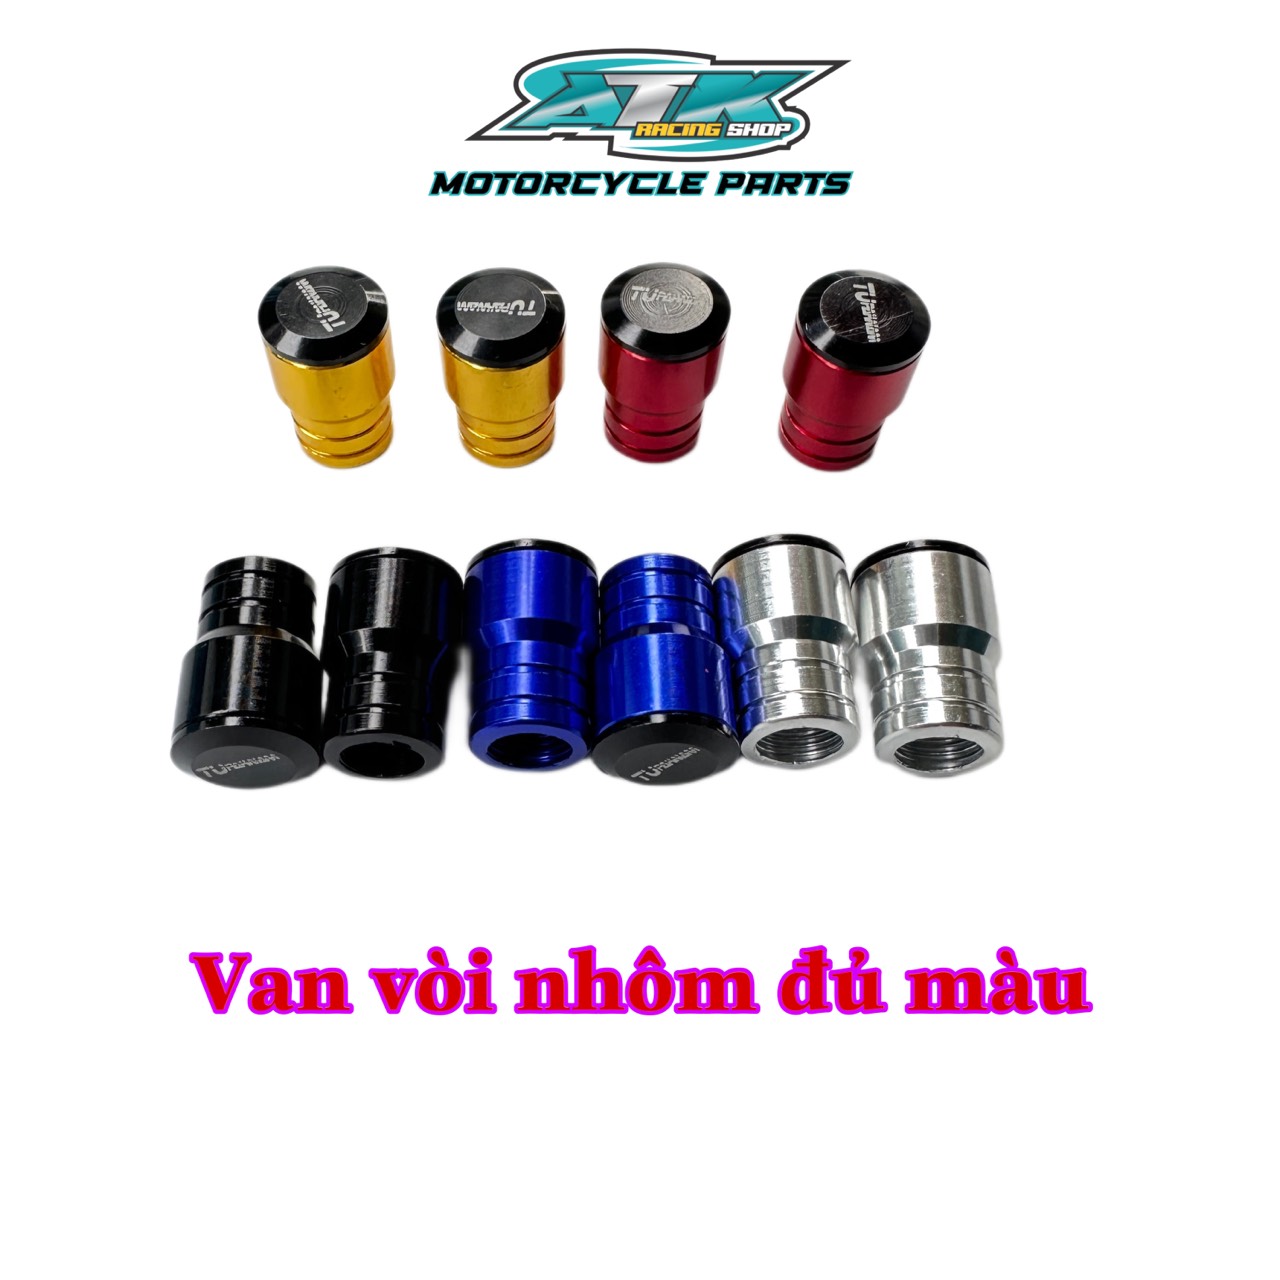 Universal colorful motorcycle wheel aluminum tap valve cover cap